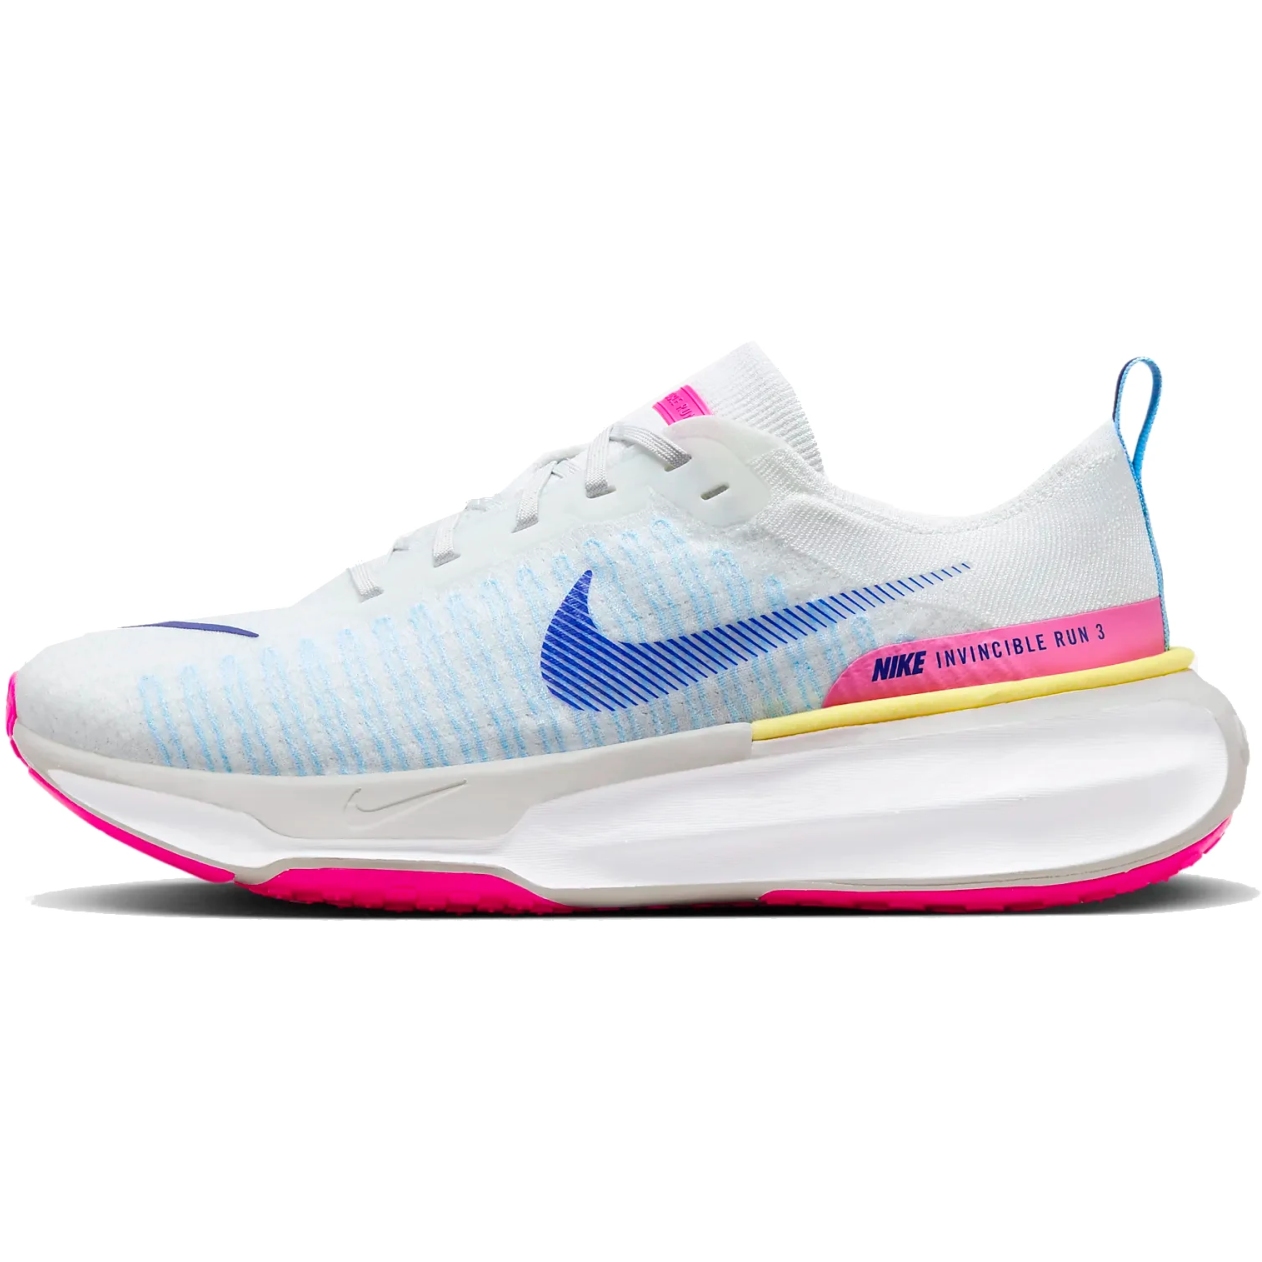 Bild von Nike Invincible 3 Straßenlaufschuhe Herren - white/photon dust/fierce pink/deep royal blue DR2615-105